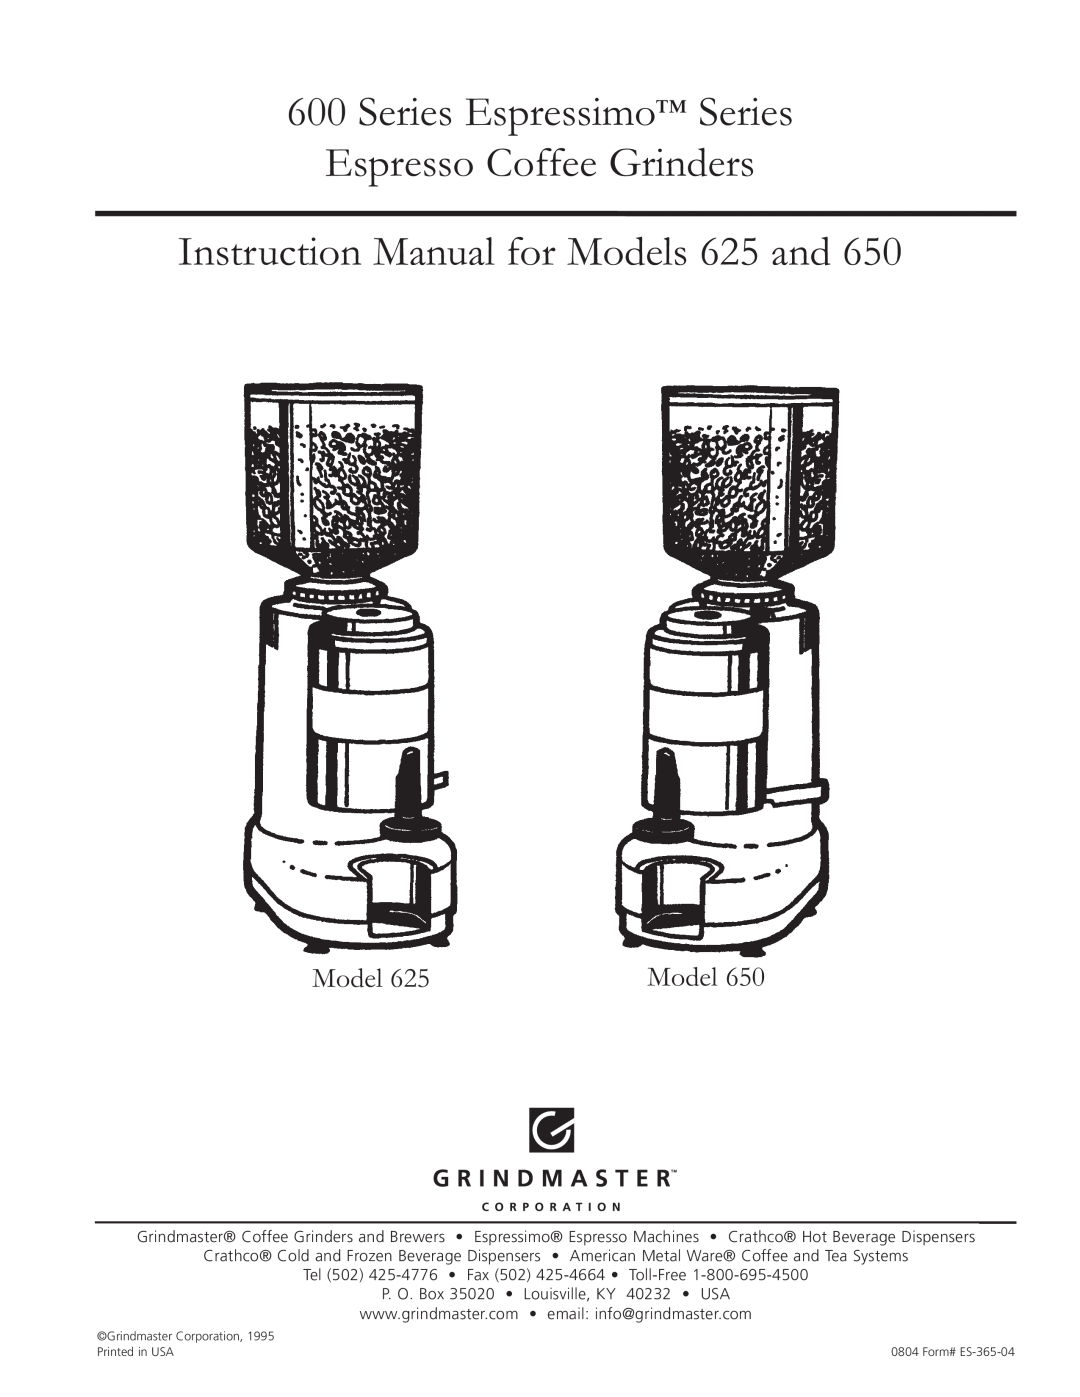 Grindmaster 650, 625 instruction manual Series Espressimo Series Espresso Coffee Grinders, Model 